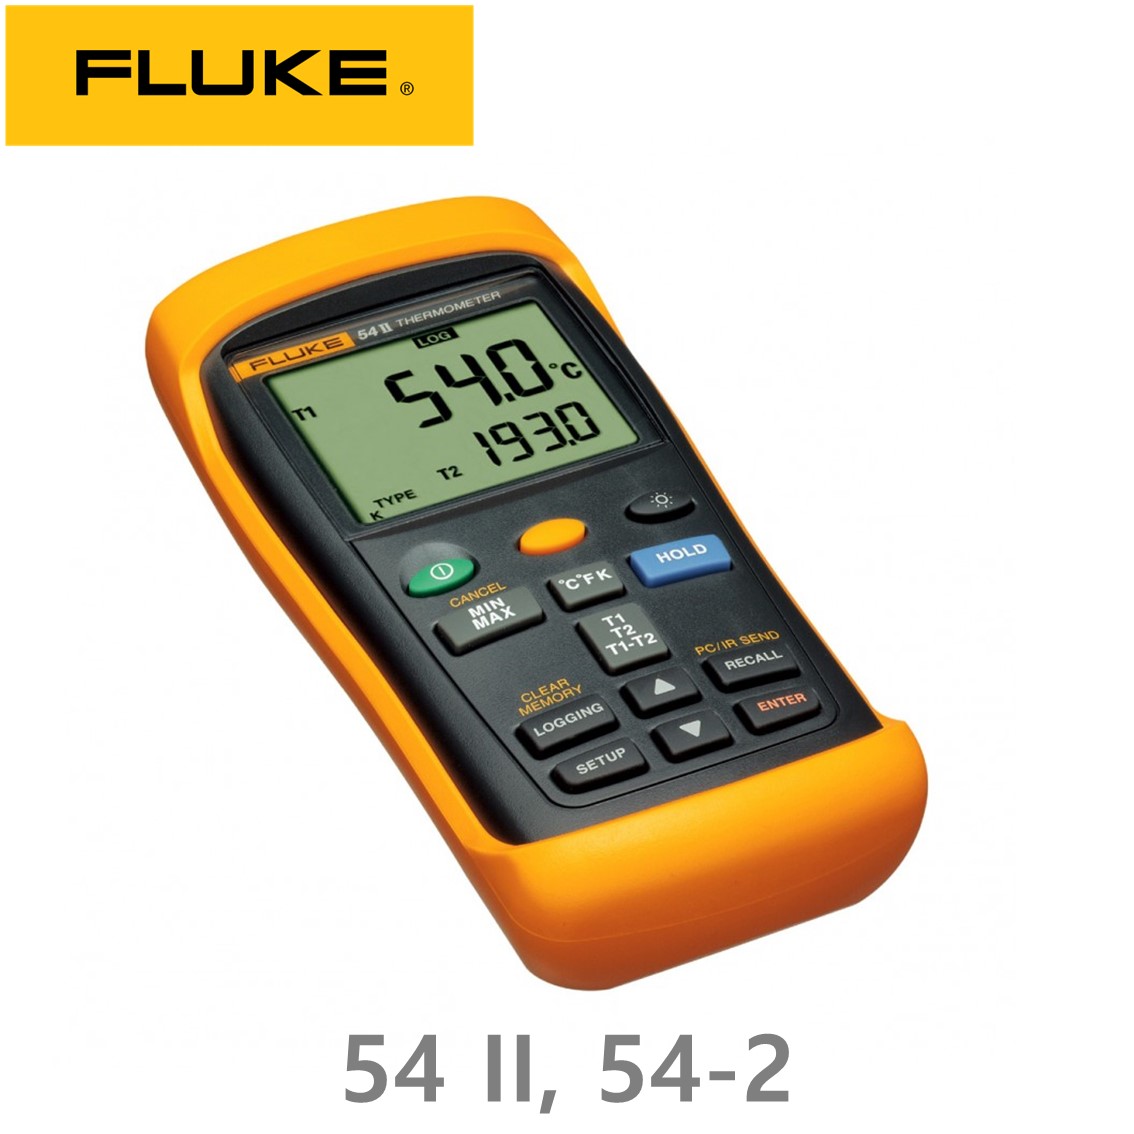 [ FLUKE 54-2 B 60Hz] 정품 플루크54 II 온도미터, 접촉식 온도계, 디지털 온도계 (2채널)